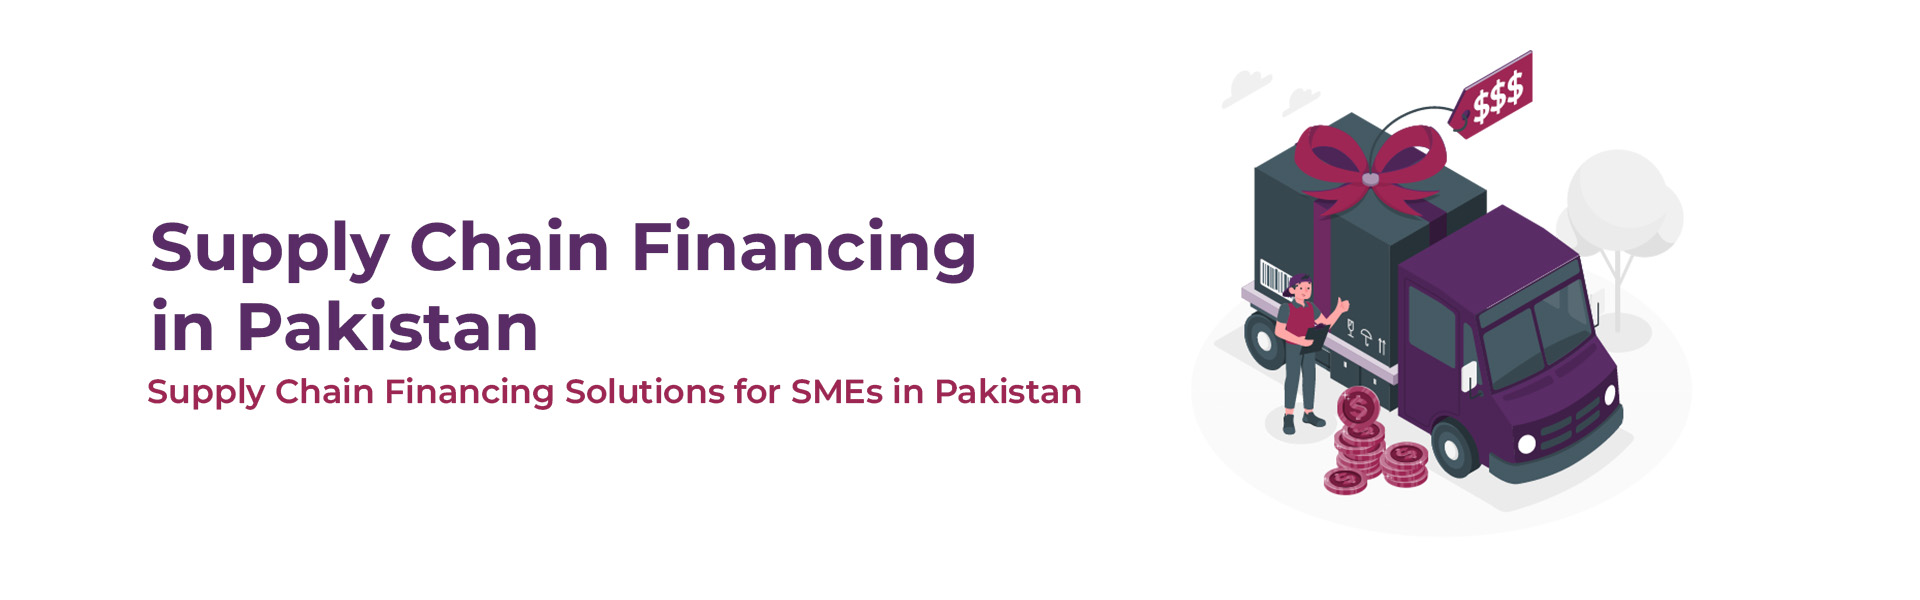 Supply Chain Financing in Pakistan